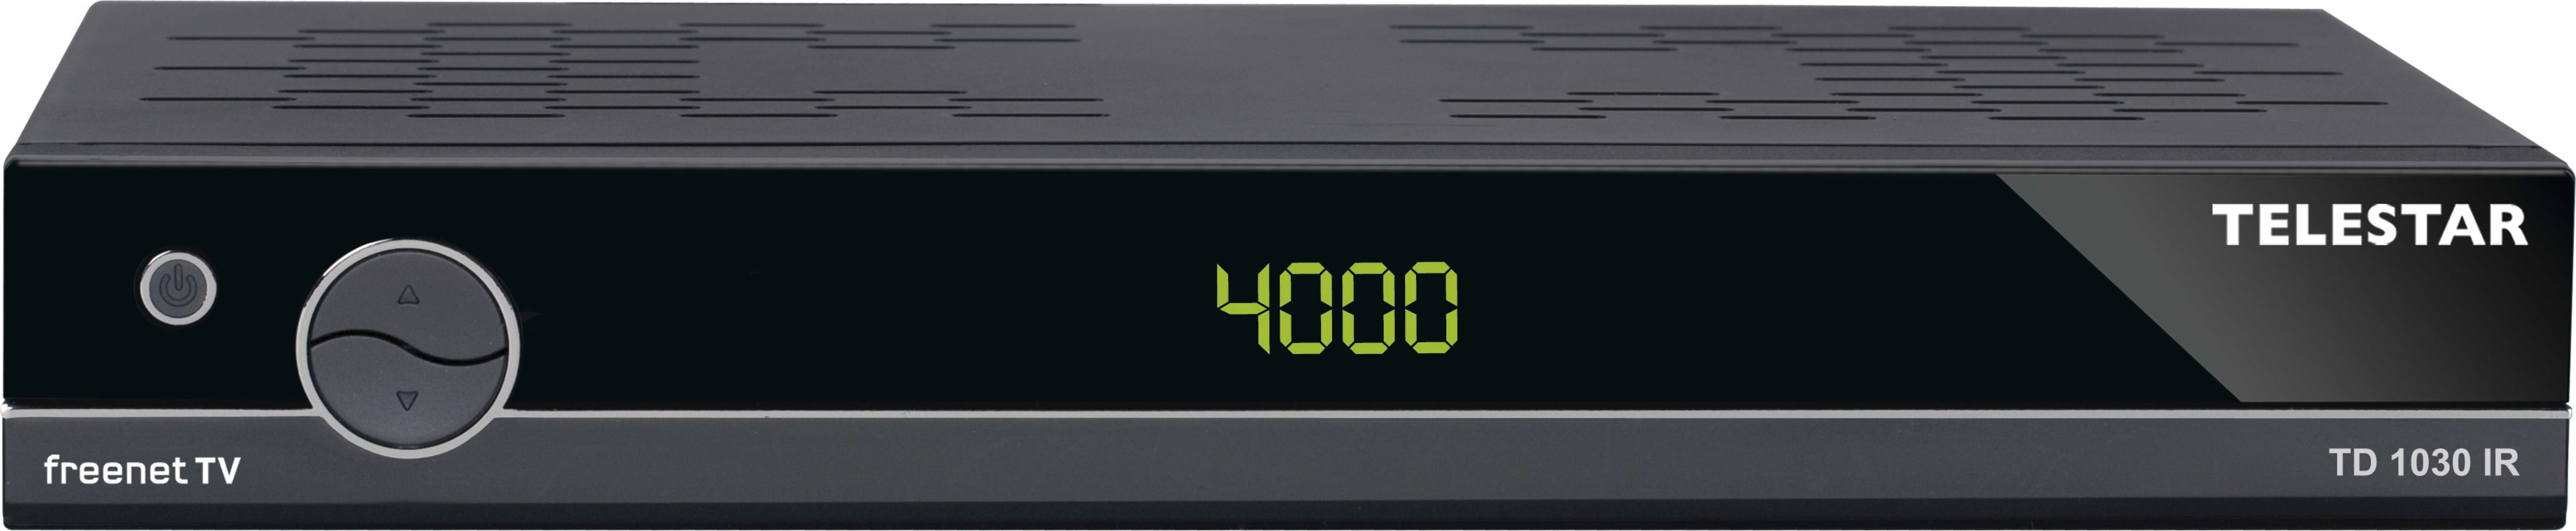 TELESTAR 5310496 DVB-T2 Receiver 1030 DVB-T, DVB-T2 TD (HDTV, Schwarz) (H.265), IR HD